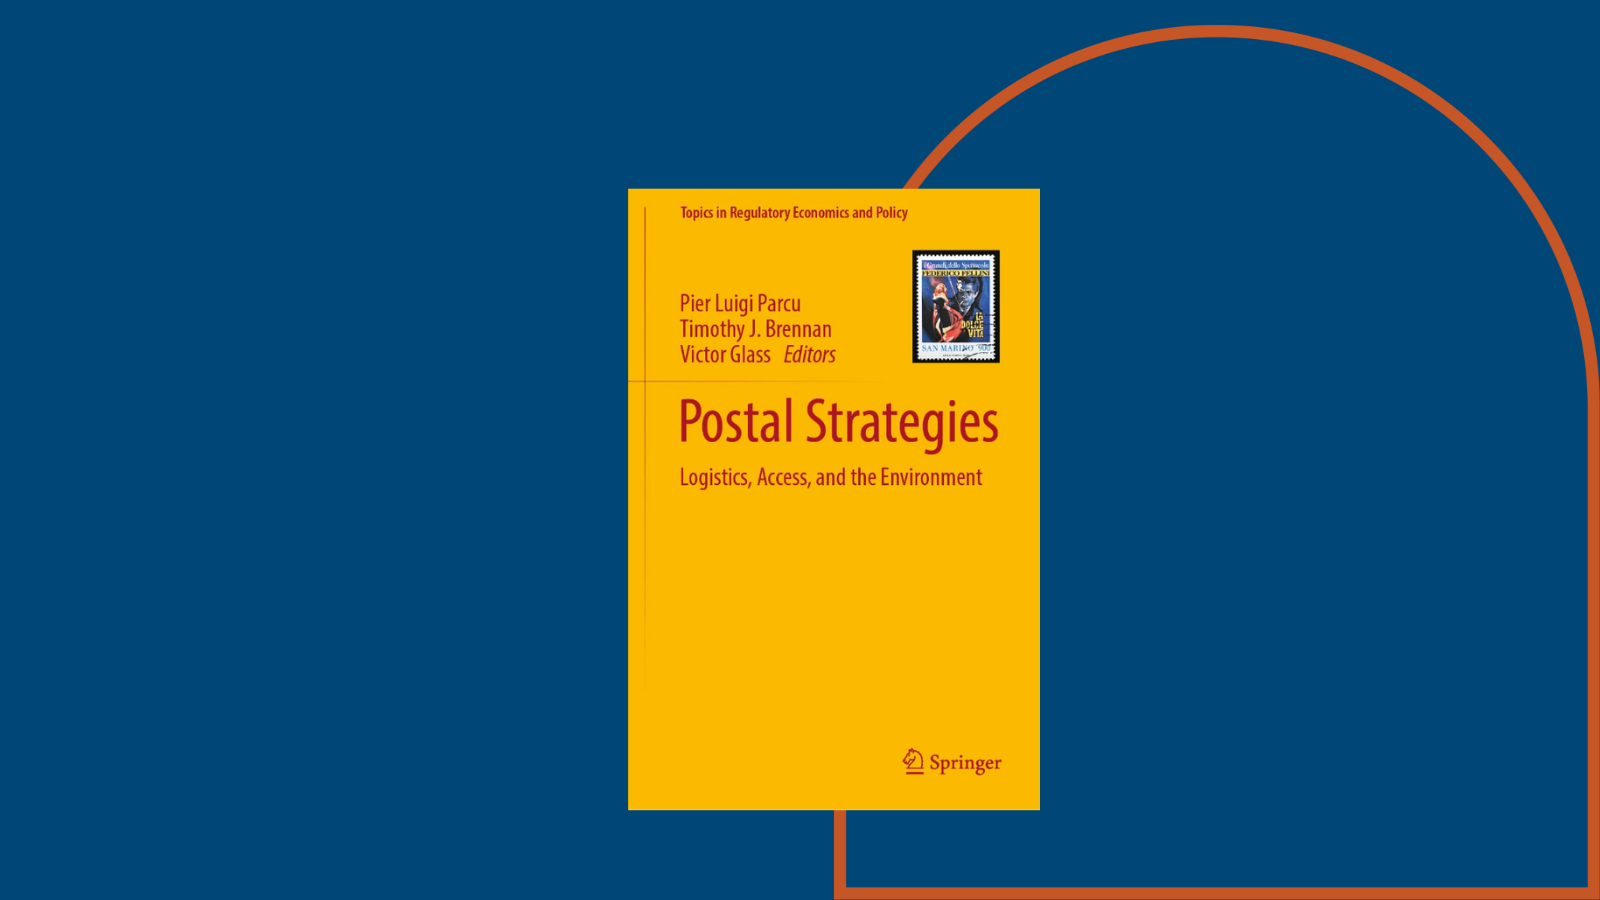 Postal strategies book hardcover